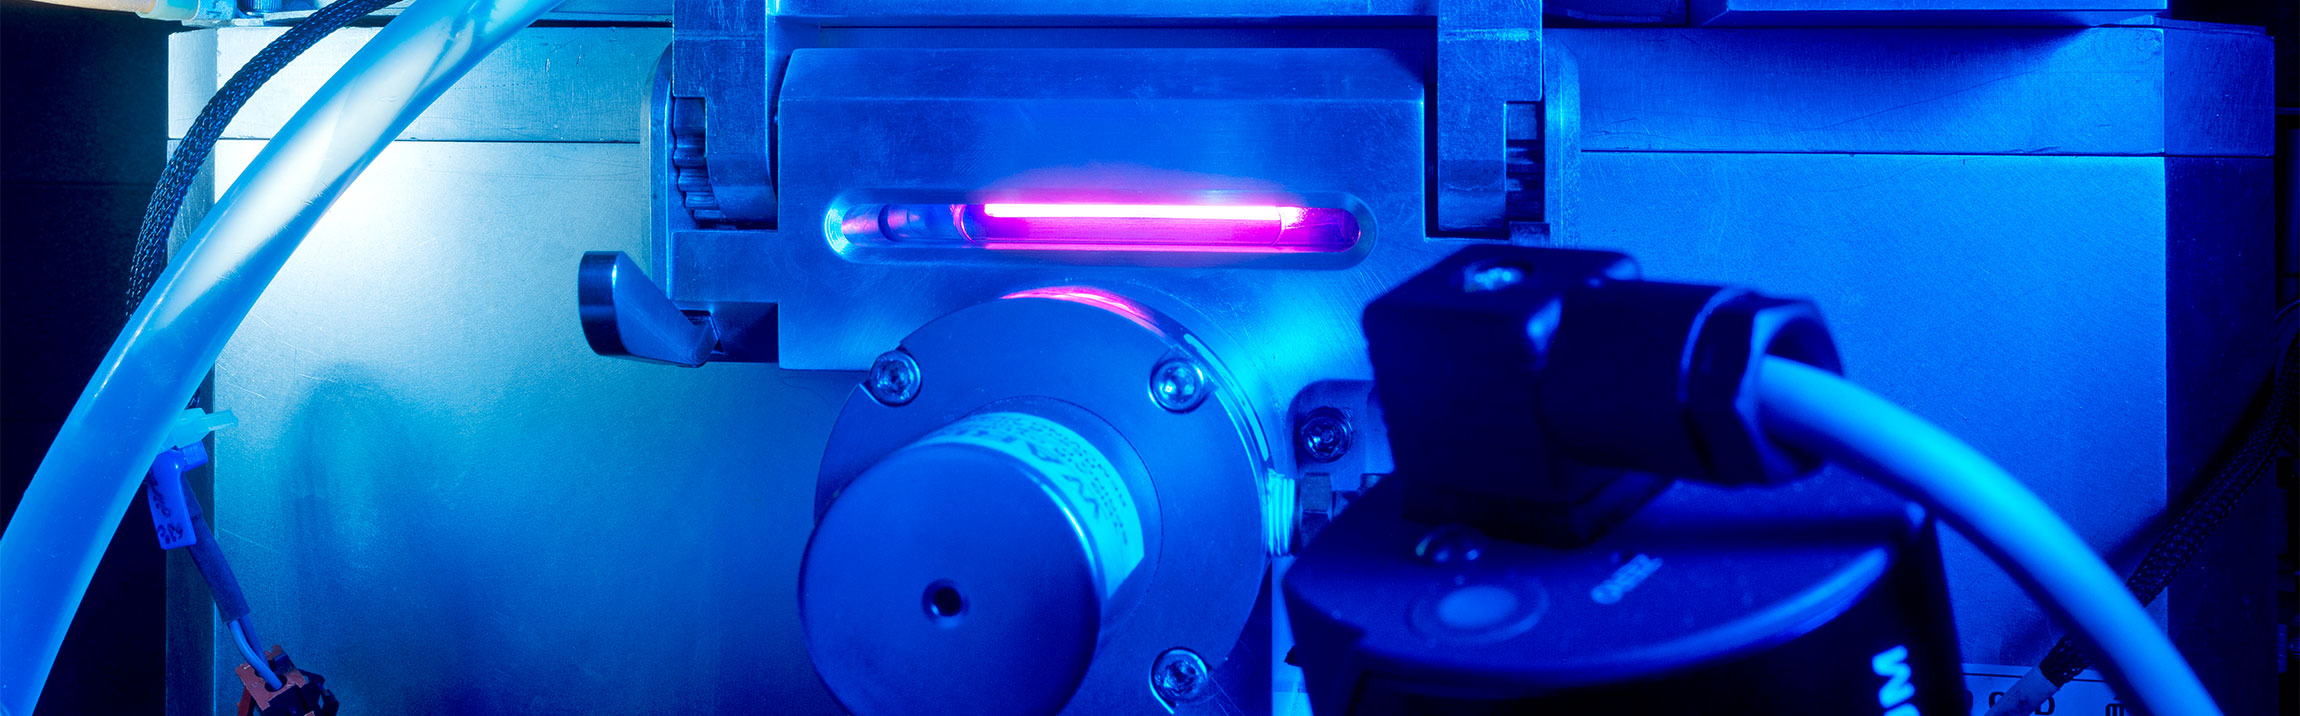 Plasma generator in the Fraunhofer EMFT MEMS (microelectromechanical system) line